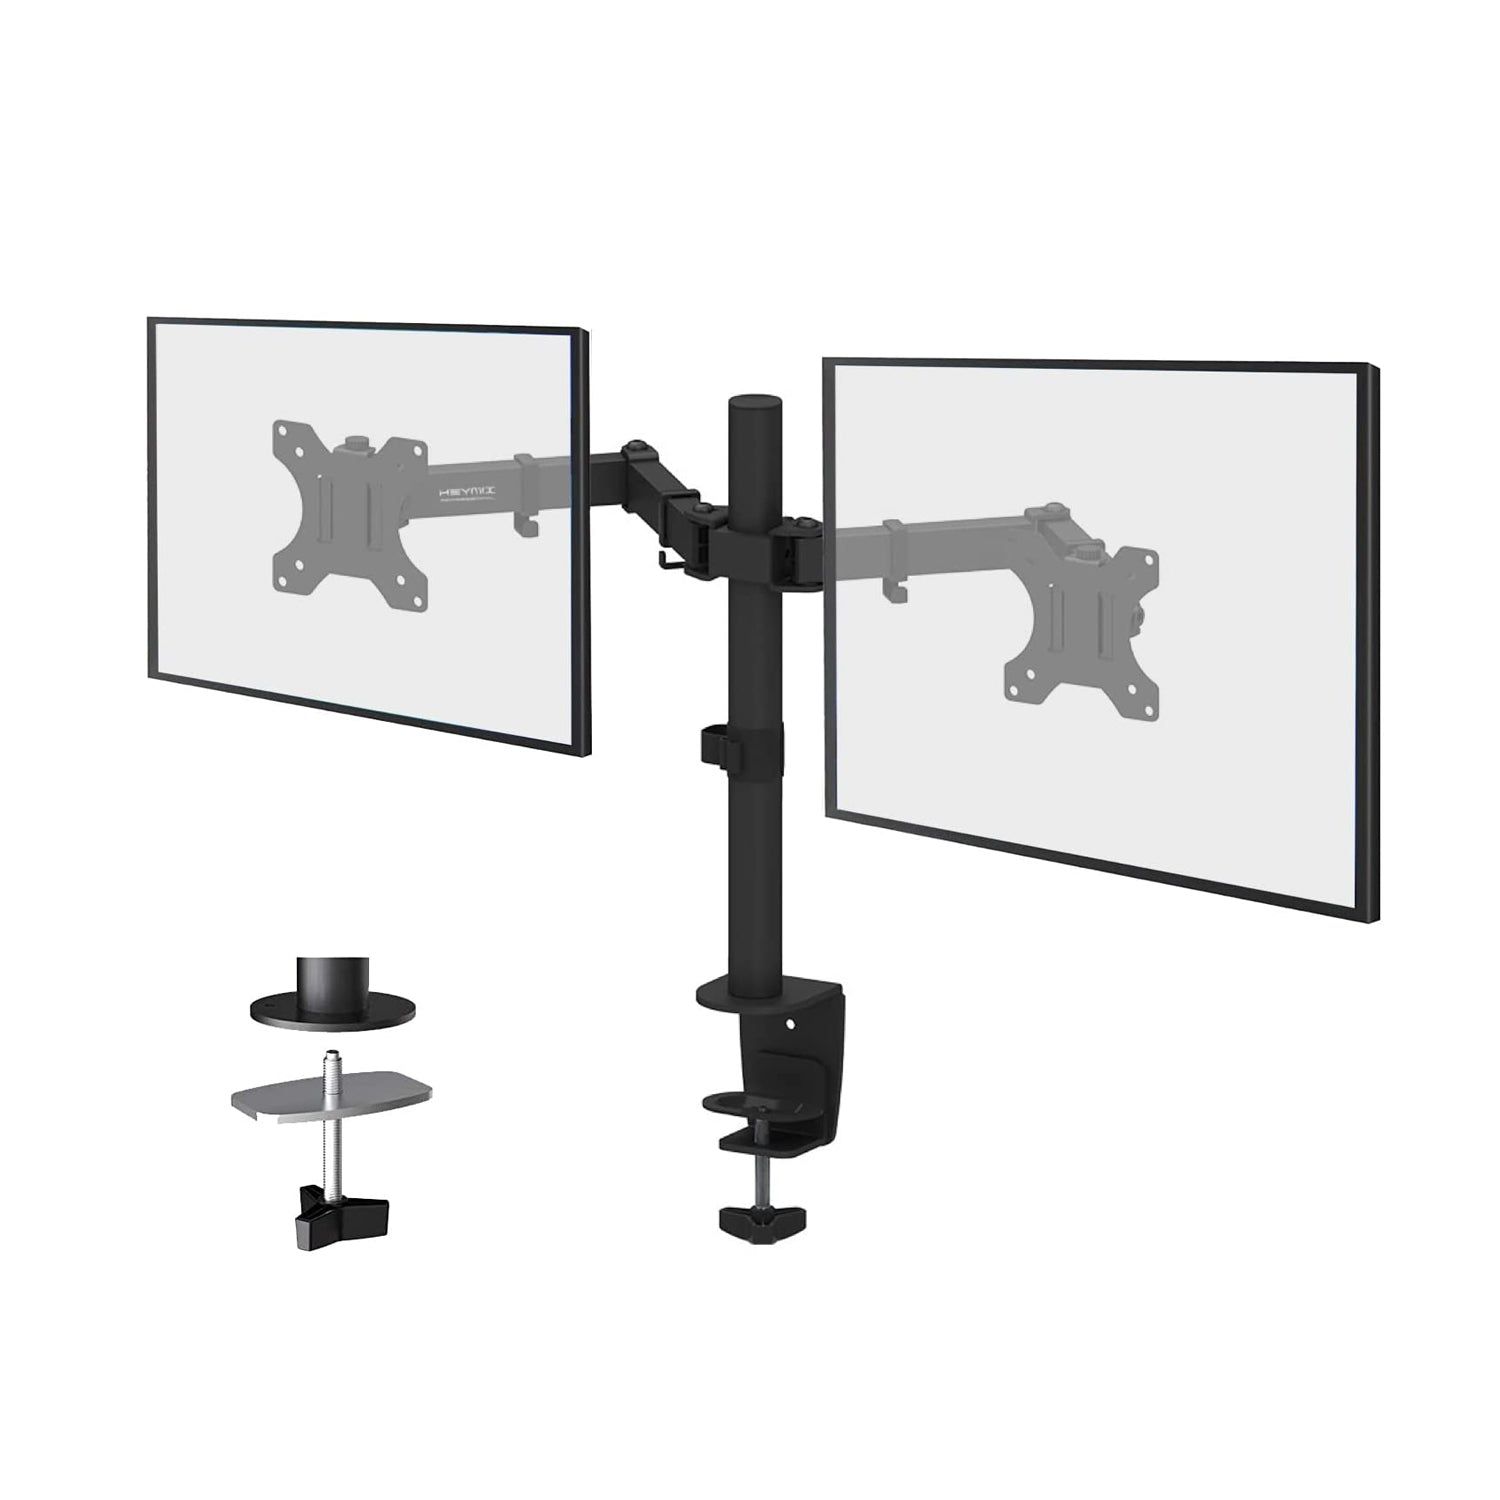 OliandOla Dual Monitor Stand VESA Monitor Arm for 2 LCD